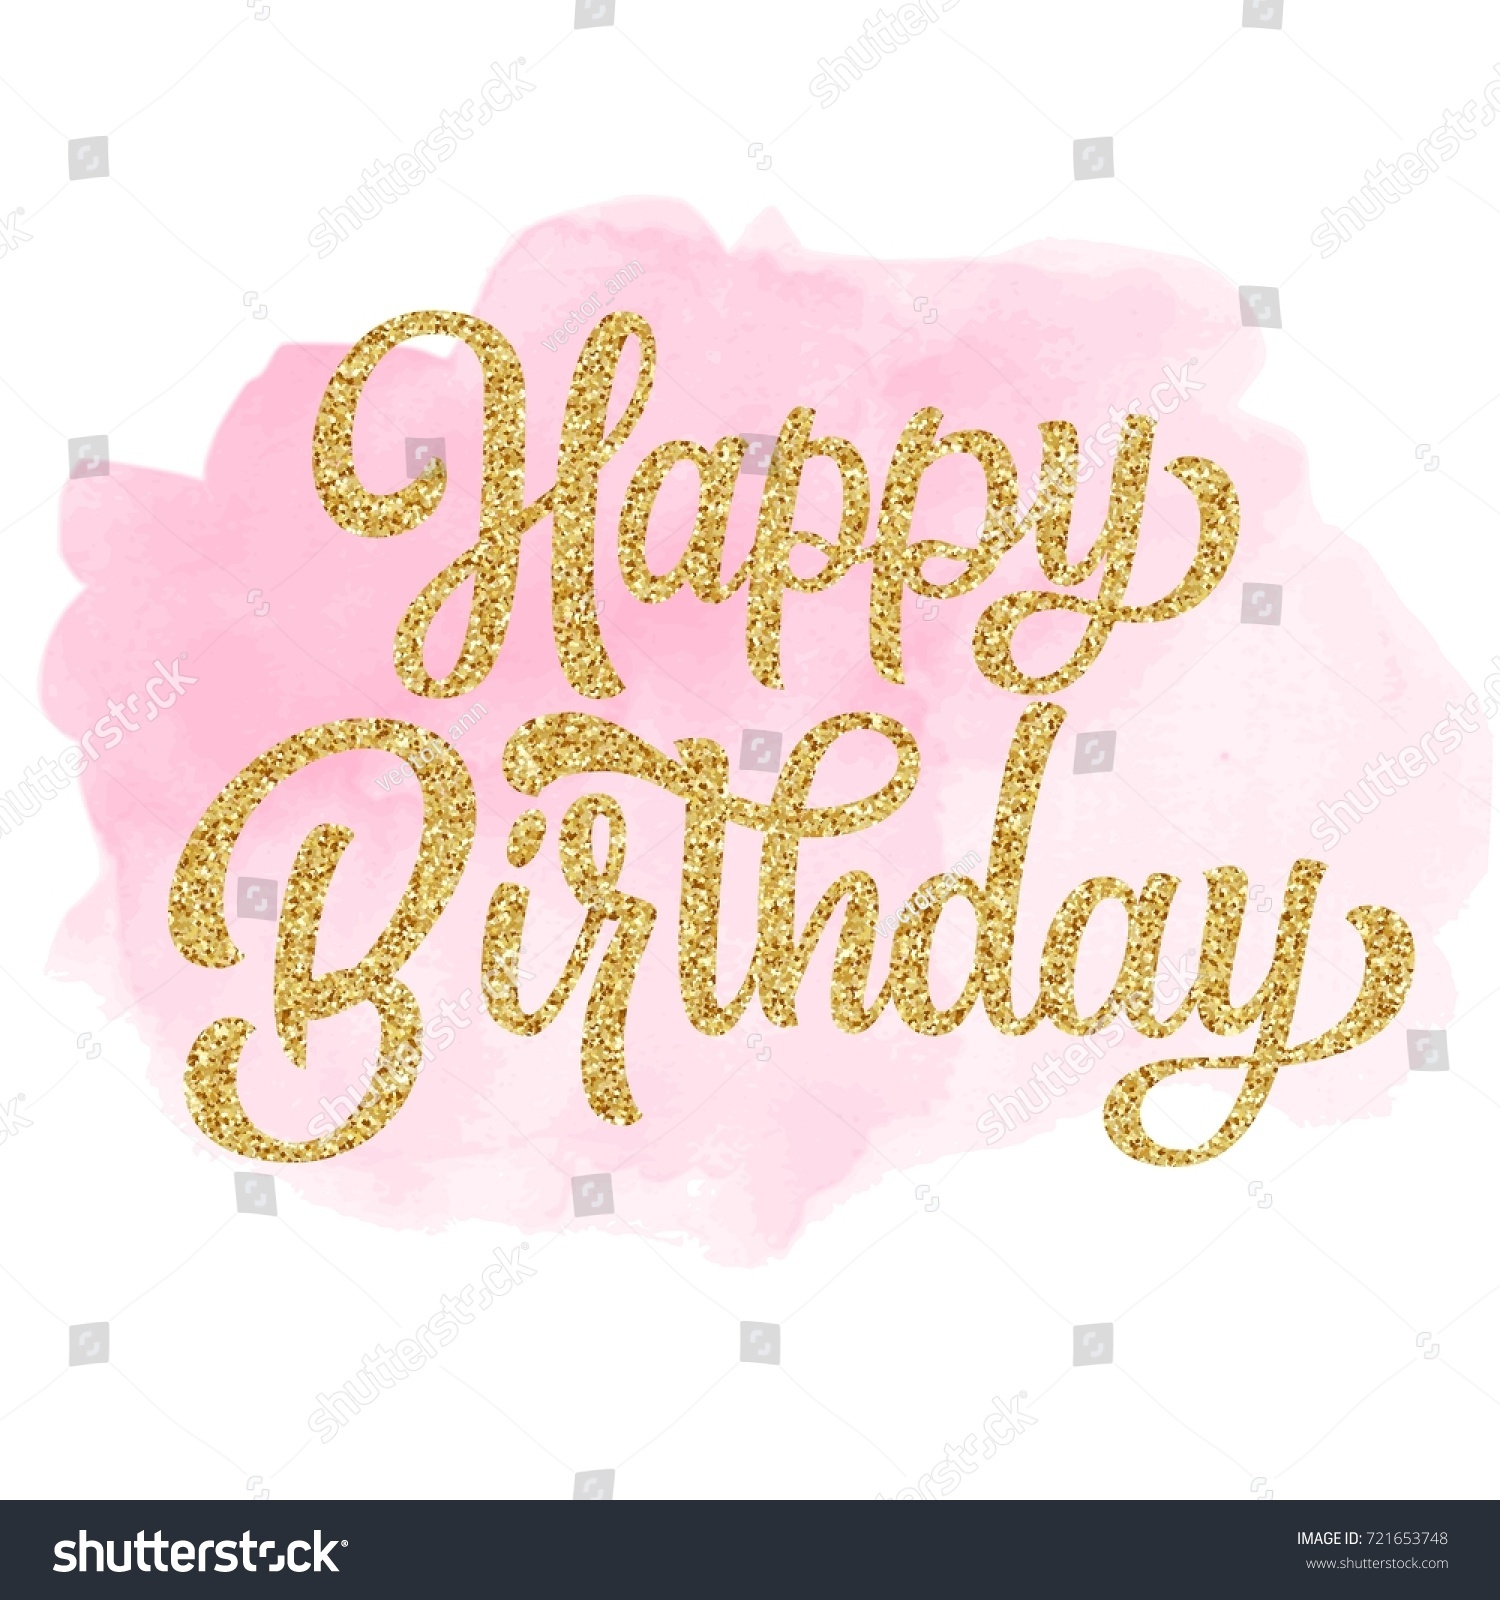 Download Happy Birthday Hand Lettering Golden Glitter Stock Vector ...